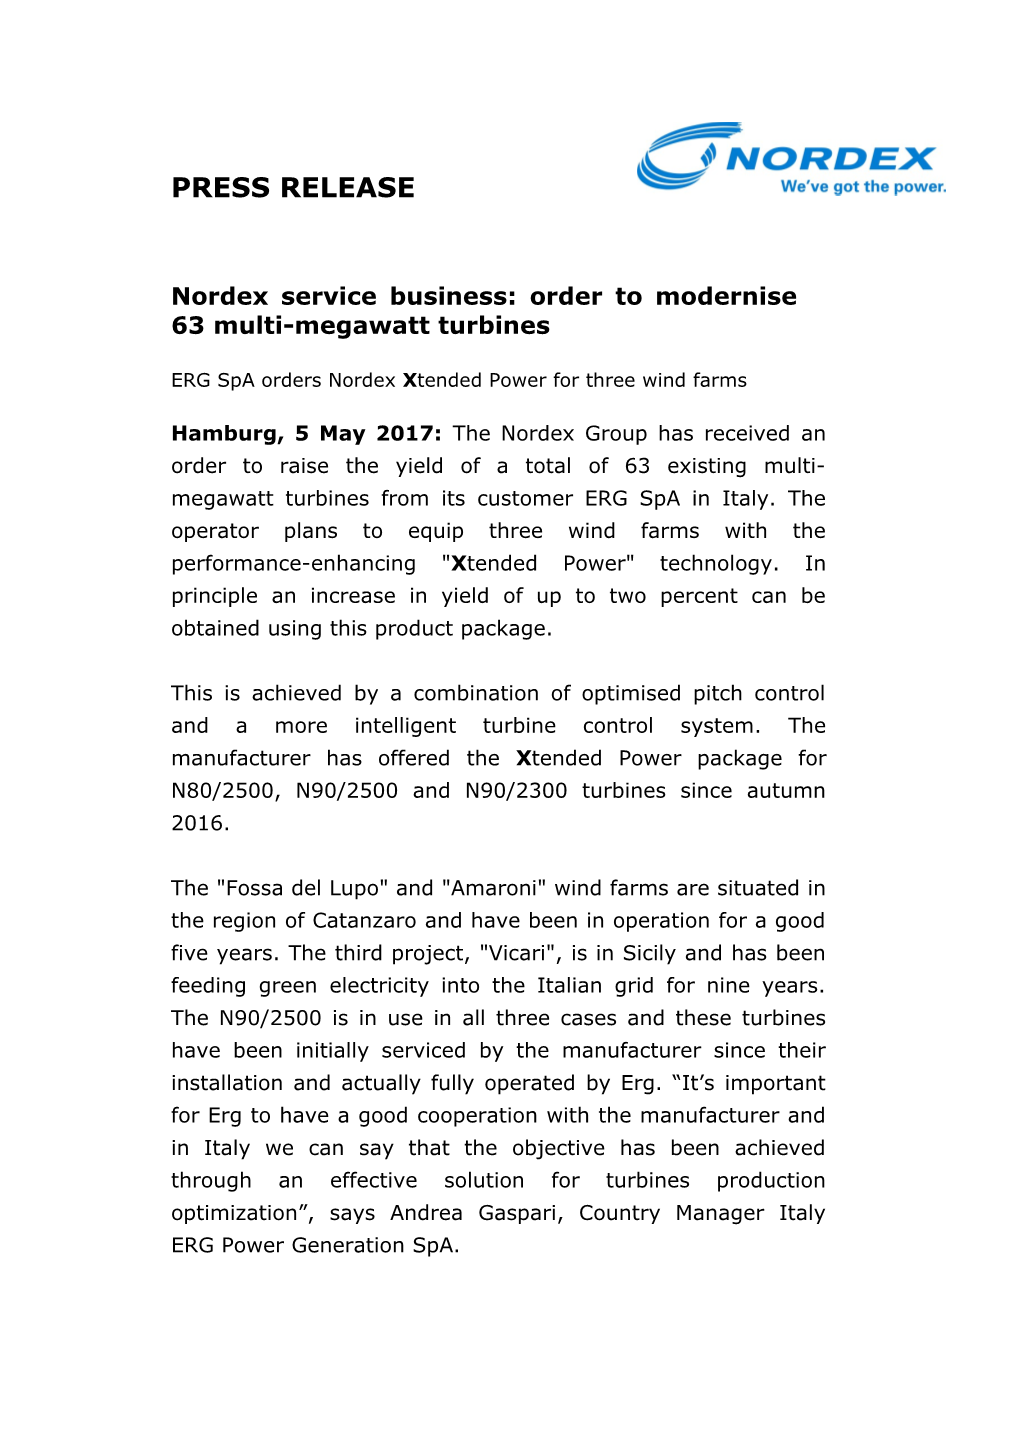 Nordex Service Business: Order to Modernise 63 Multi-Megawatt Turbines